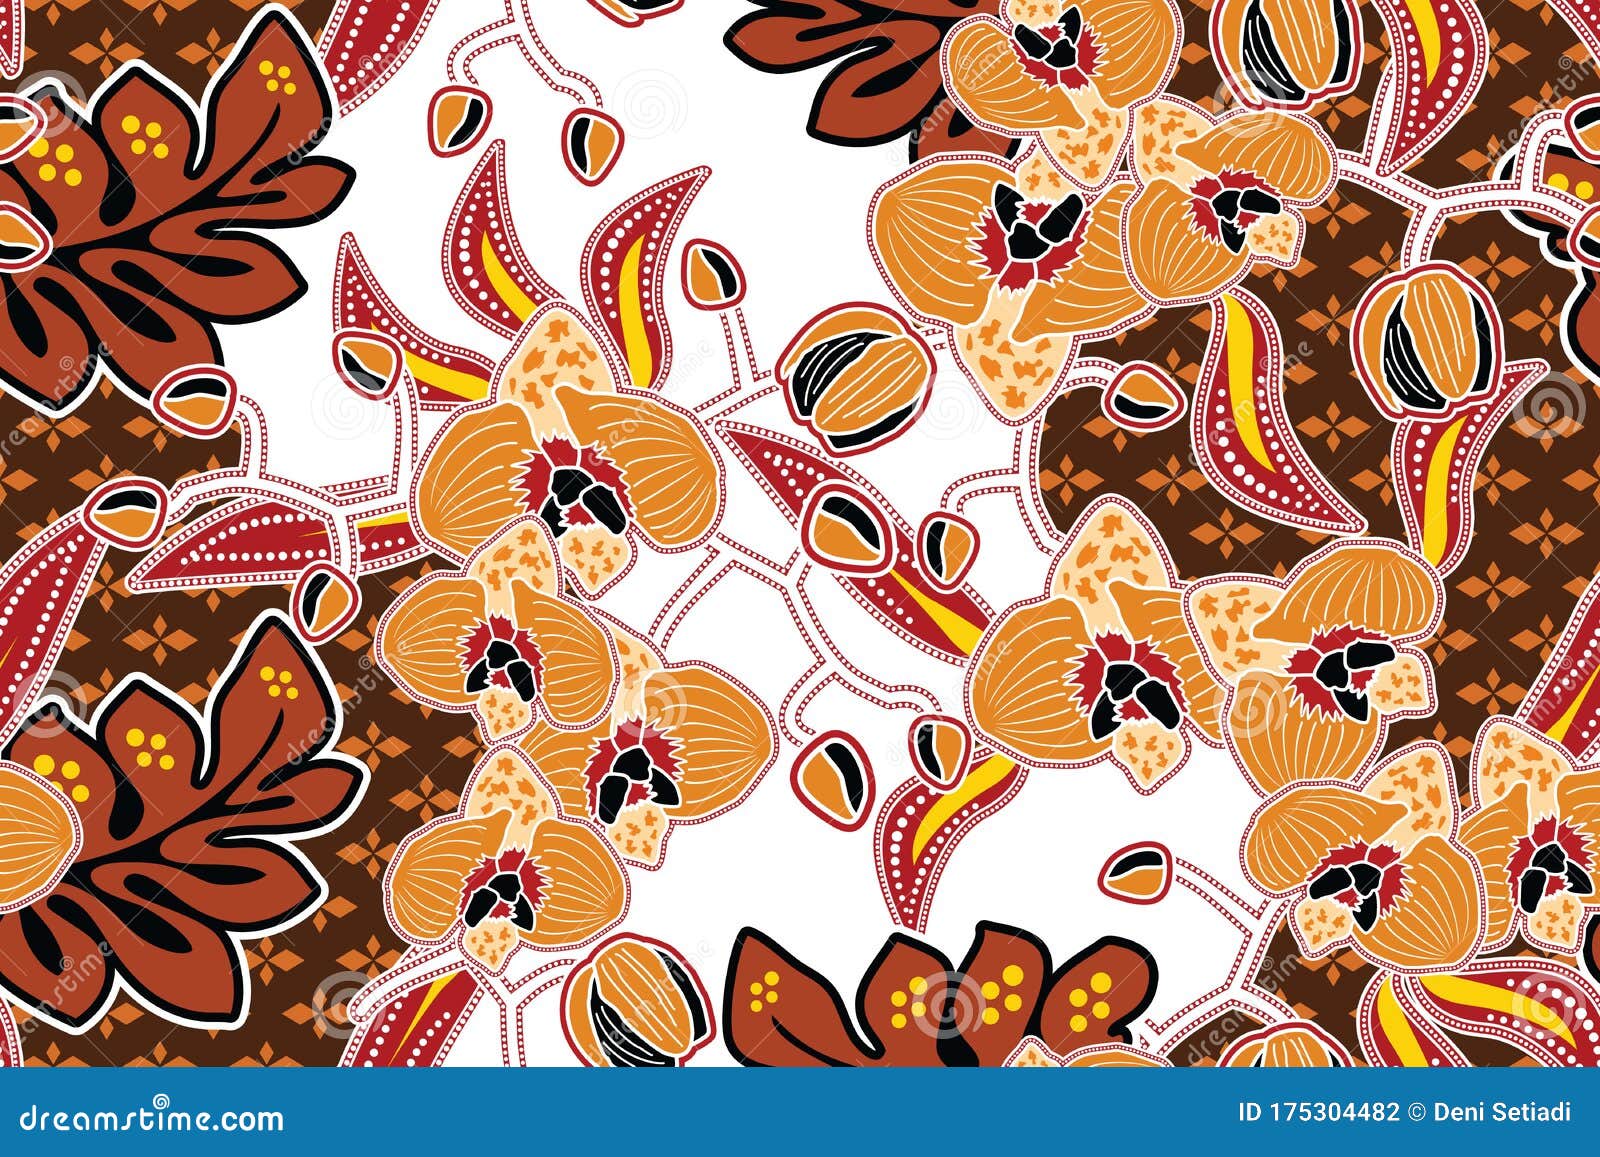 Floral Batik Motif Vector Illustration Stock Vector - Illustration of ...